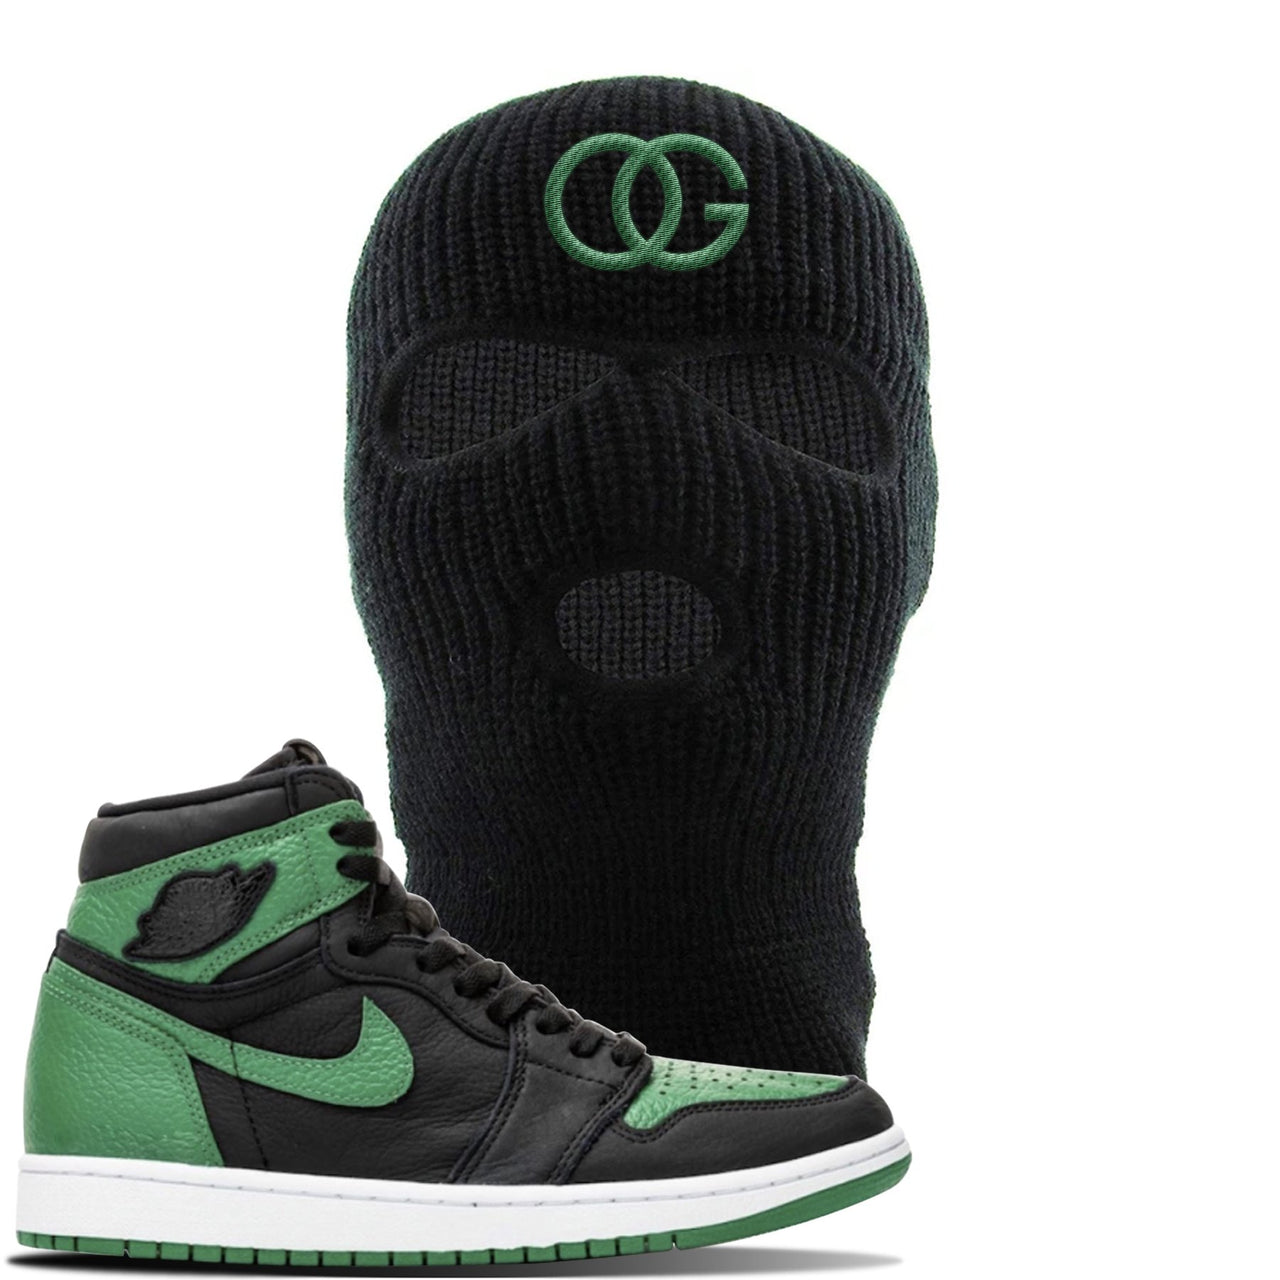 Jordan 1 Retro High OG Pine Green Gym Sneaker Black Ski Mask | Hat to match Air Jordan 1 Retro High OG Pine Green Gym Shoes | OG